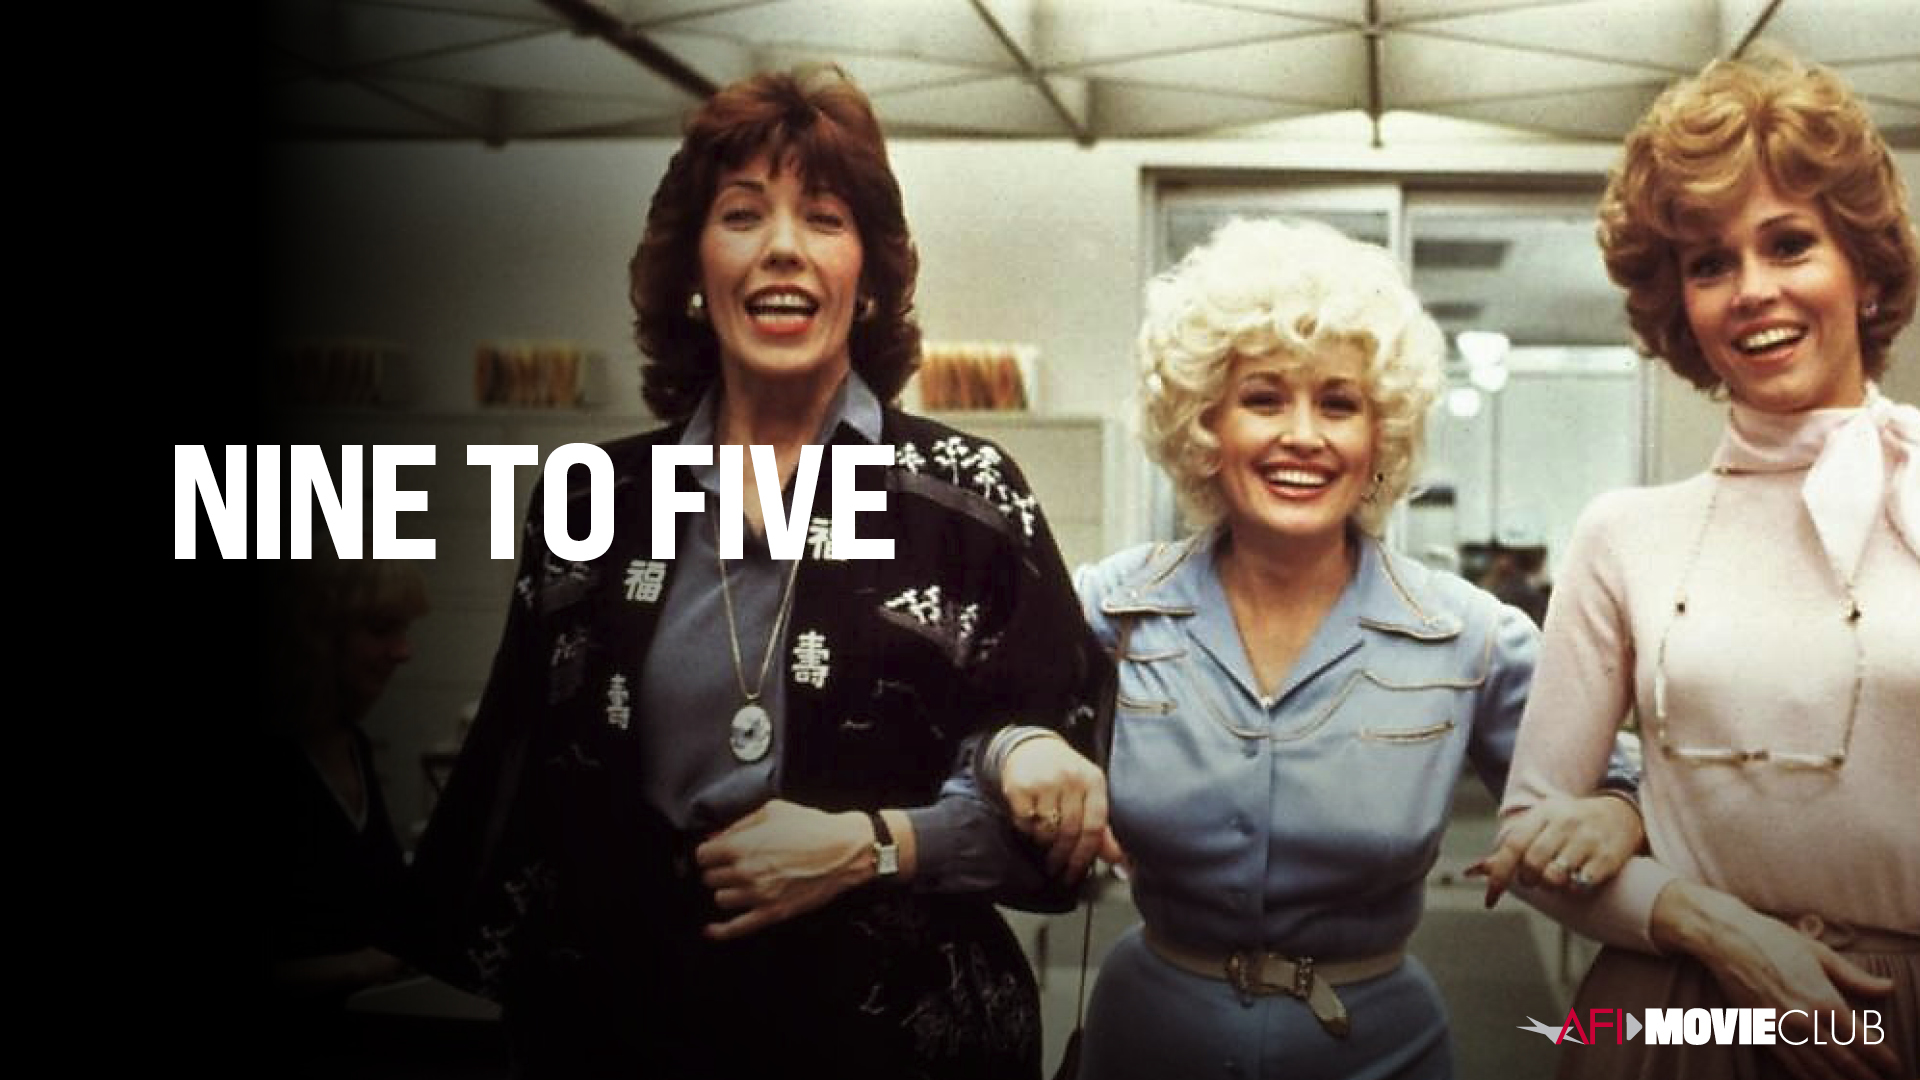 Nine to Five Film Still - Jane Fonda, Dolly Parton, and Lily Tomlin